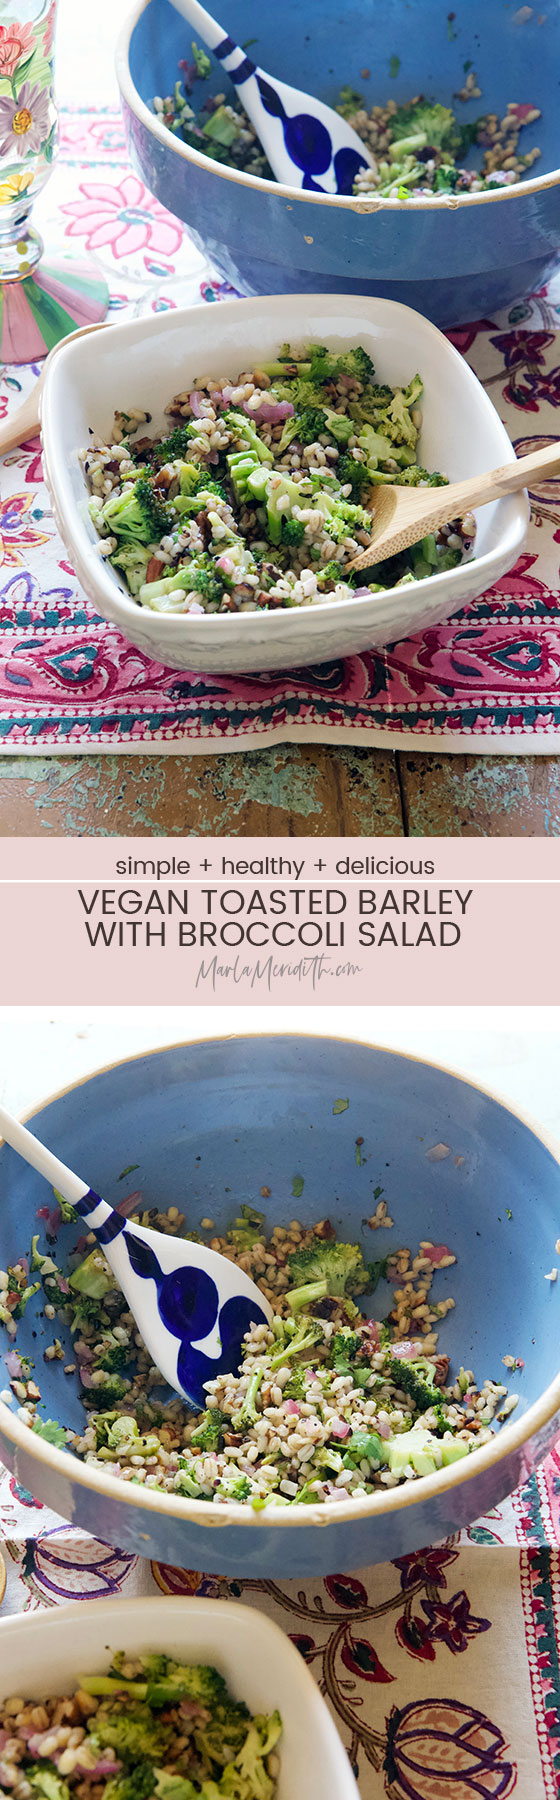 Vegan Toasted Barley with Broccoli Salad recipe